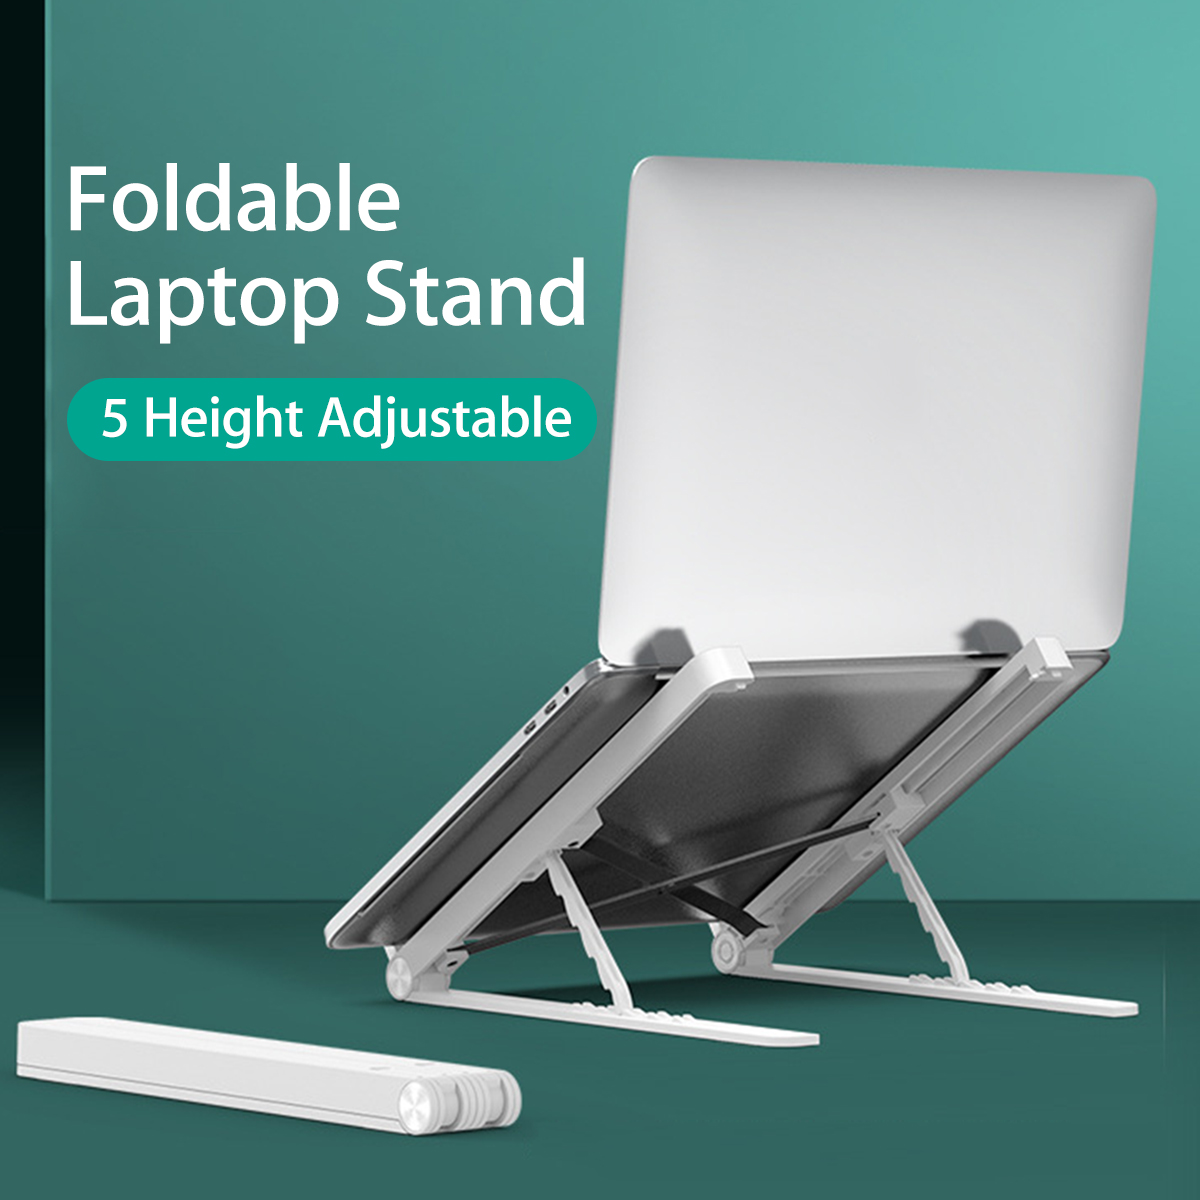 Foldable-5-Height-Adjustable-Heat-Dissipation-Telecommuting-Online-Learning-Desktop-Tablet-Laptop-St-1700967-1